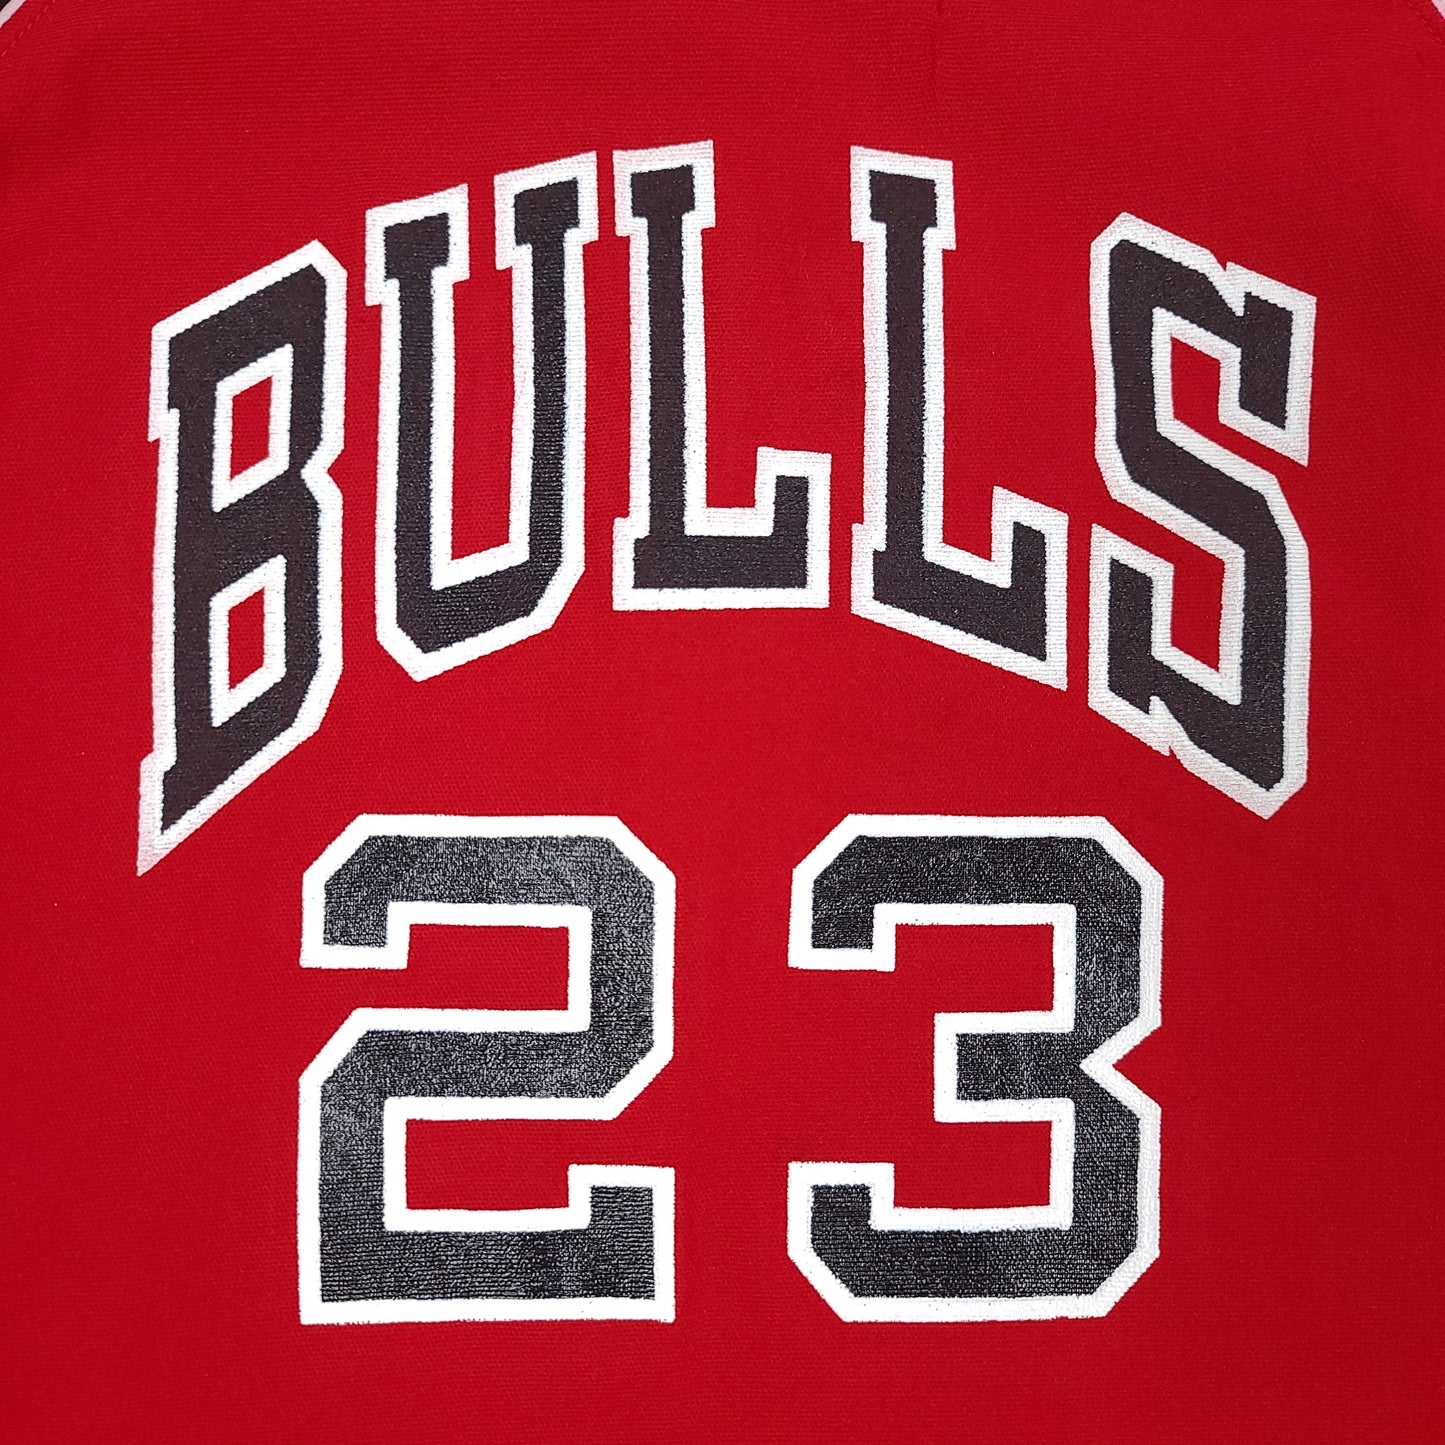 Vintage Michael Jordan Chicago Bulls 80's Red Sand Knit Jersey